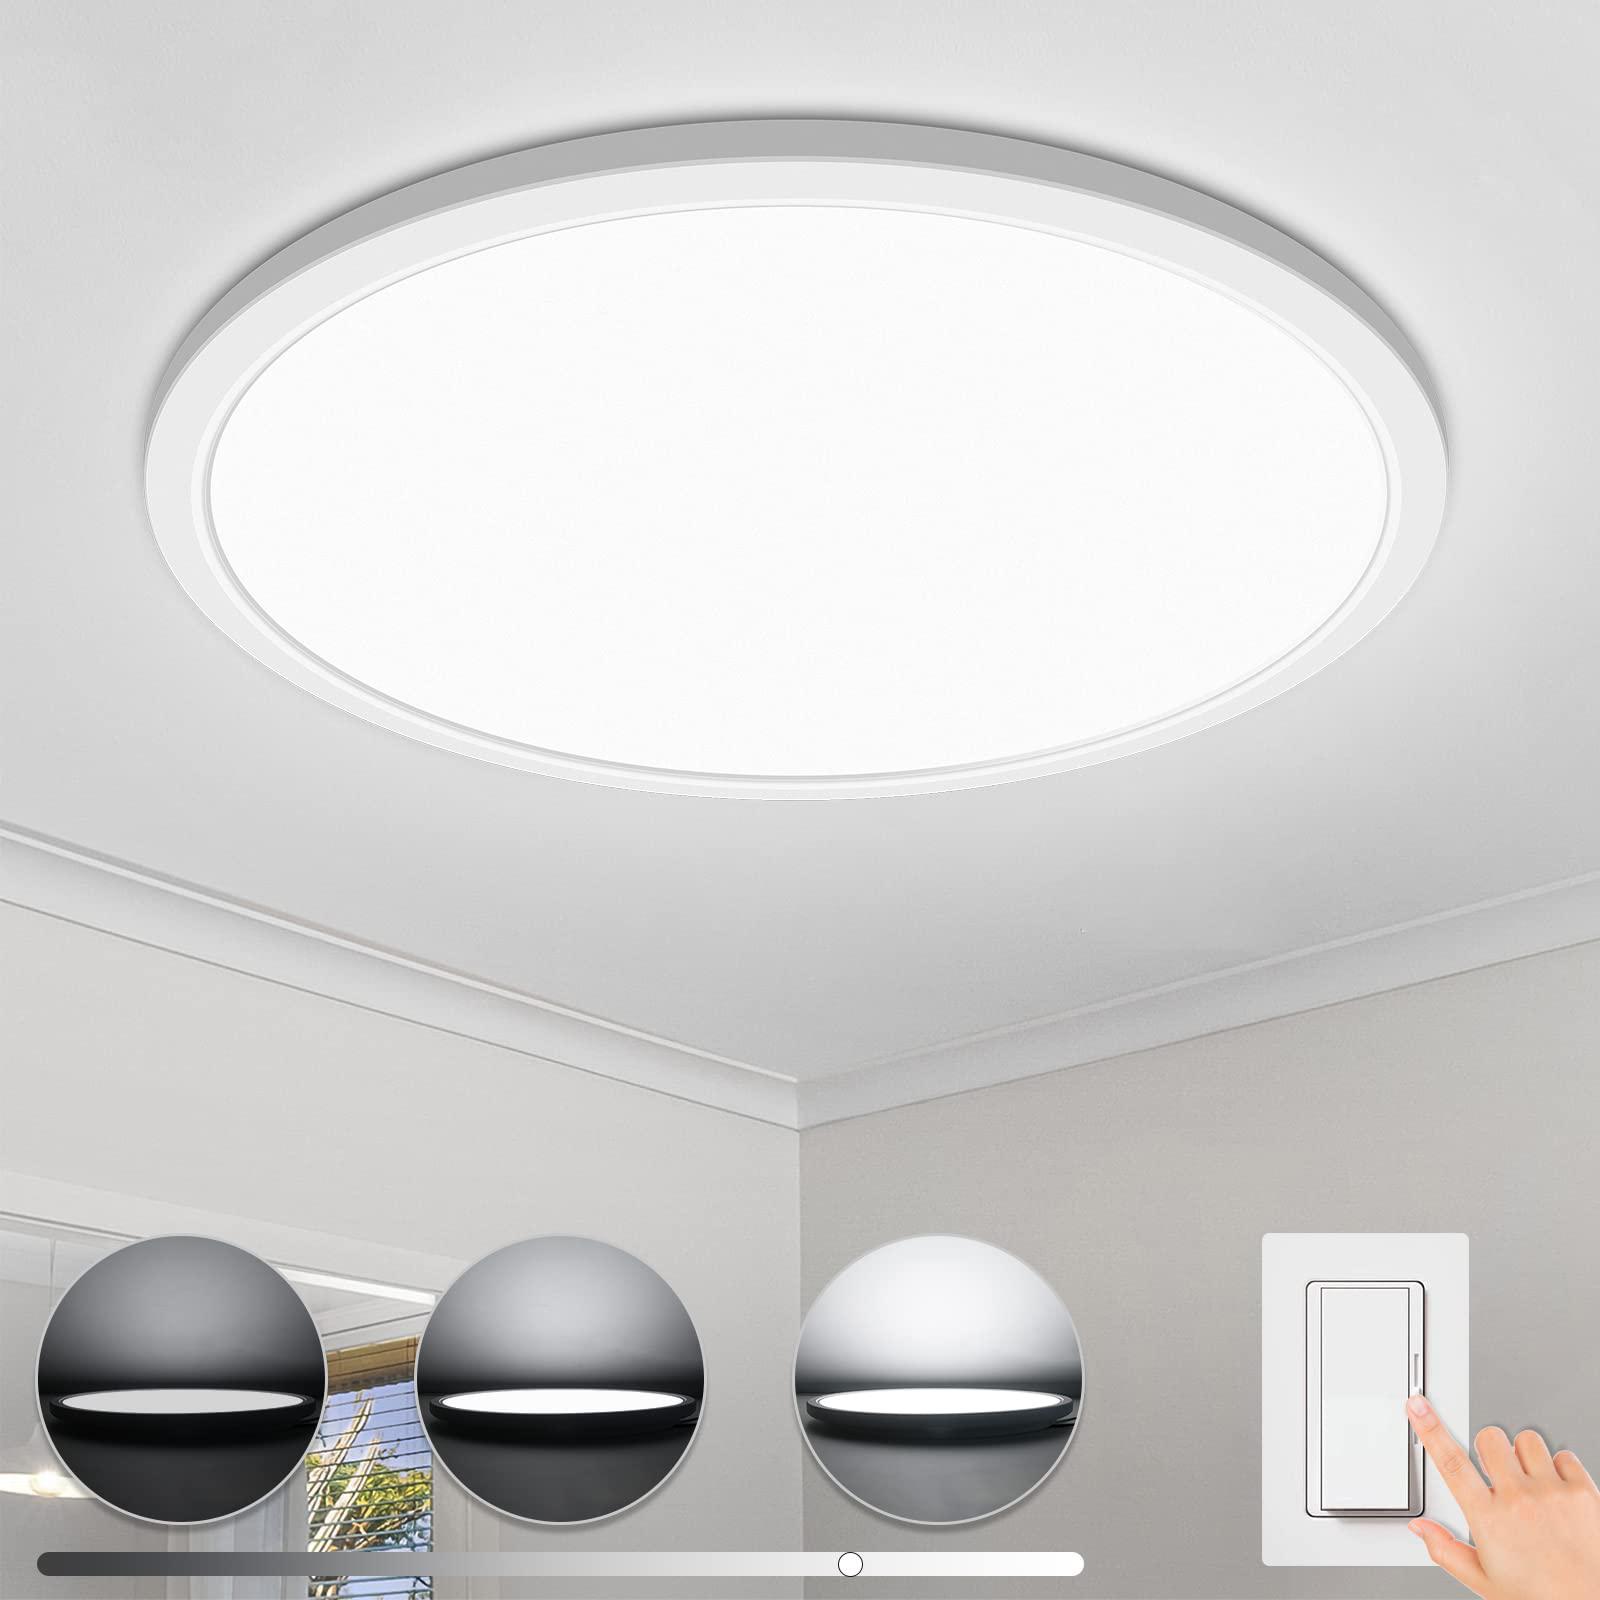 lightnum 12 inch ultra thin flush mount led ceiling light fixtures dimmable slim round flat panel lights for hallway bathroom